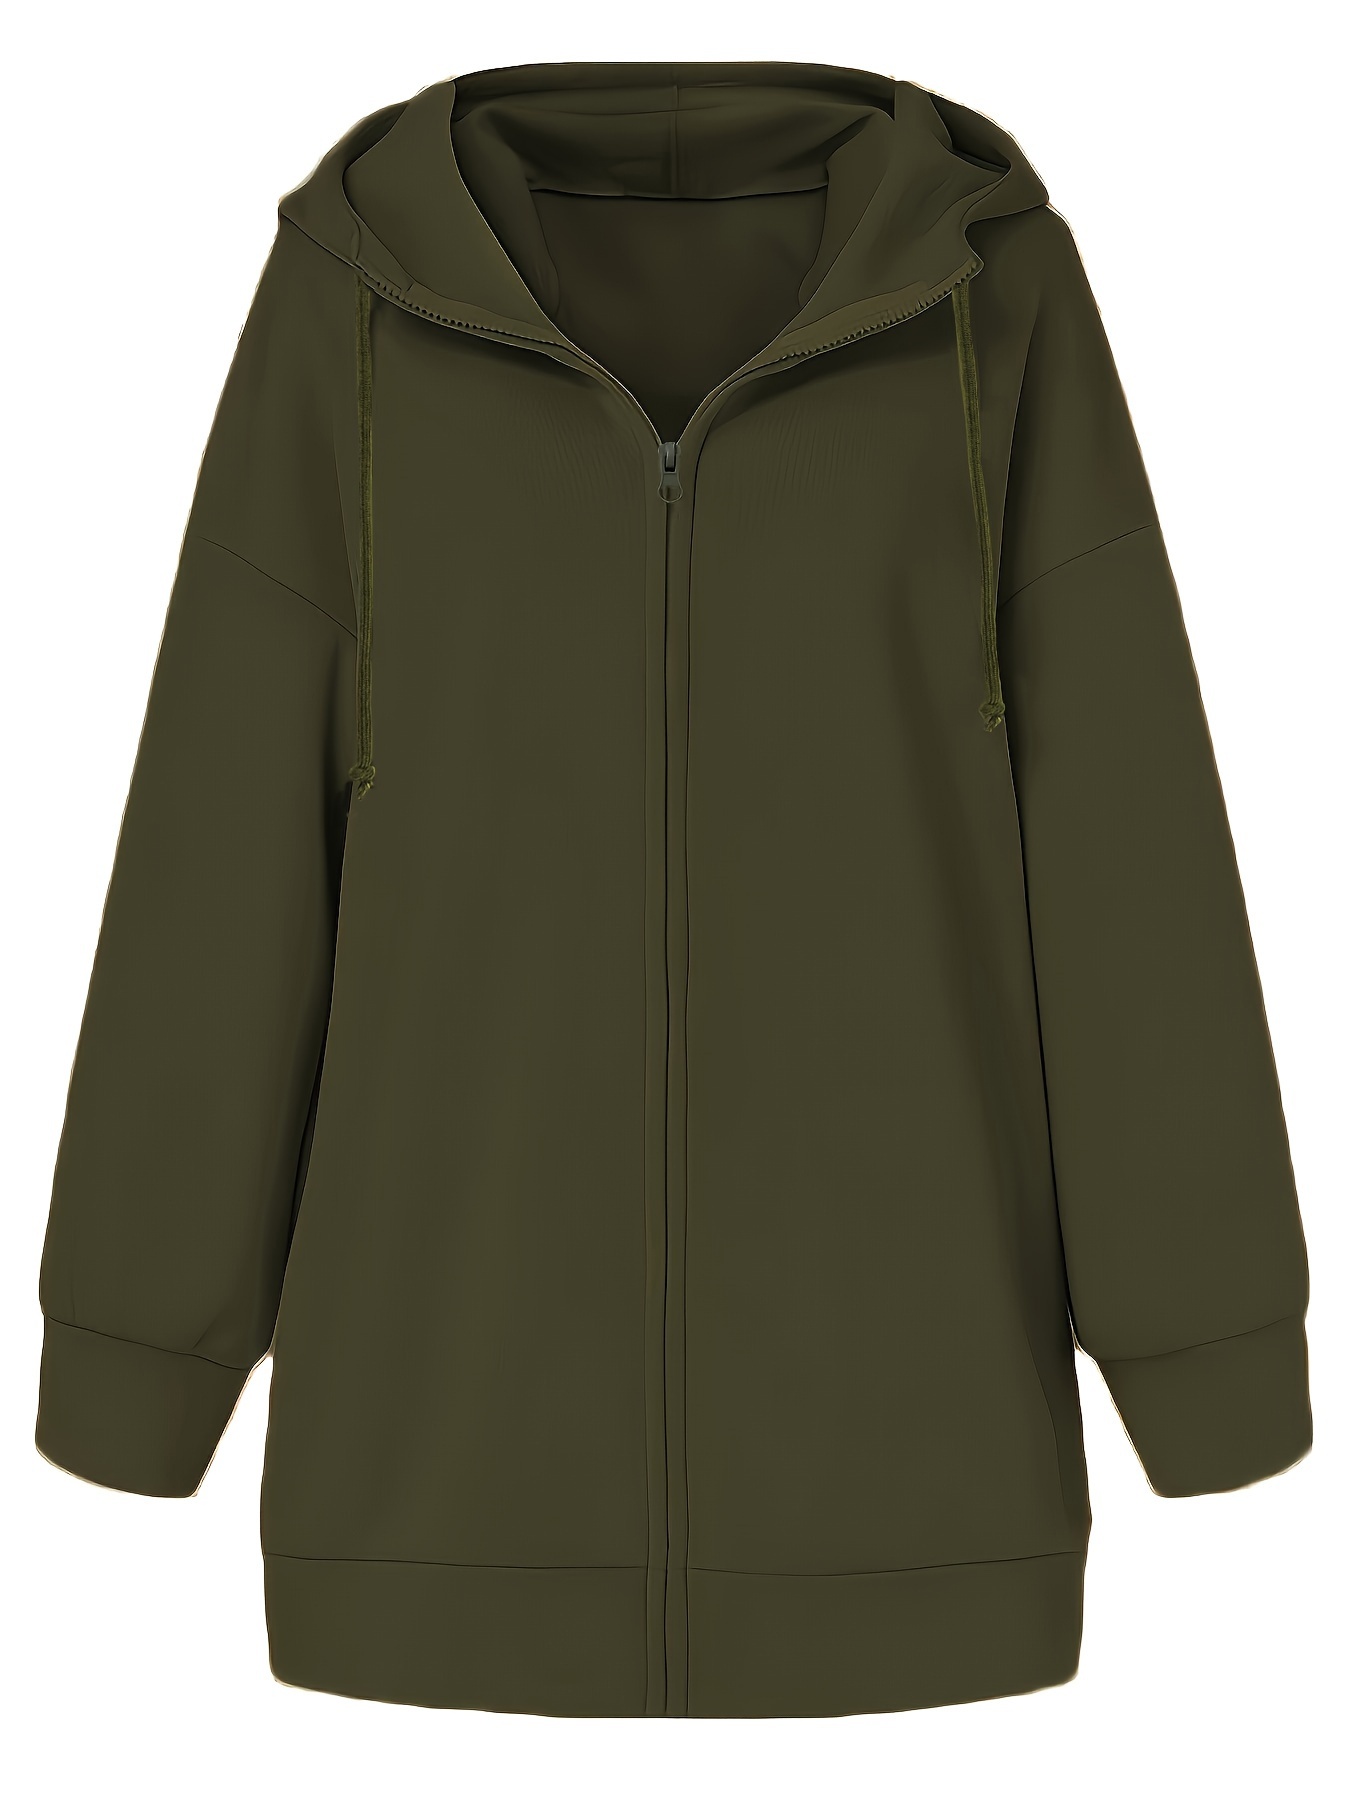 Yyeselk Women's Fleece Hooded Coat Loose Plus Size Solid Color Winter Warm  Long Sleeve Plush Hoodies Sweatshirt Hoodie Pullover Blouse Shirt Army  Green M 